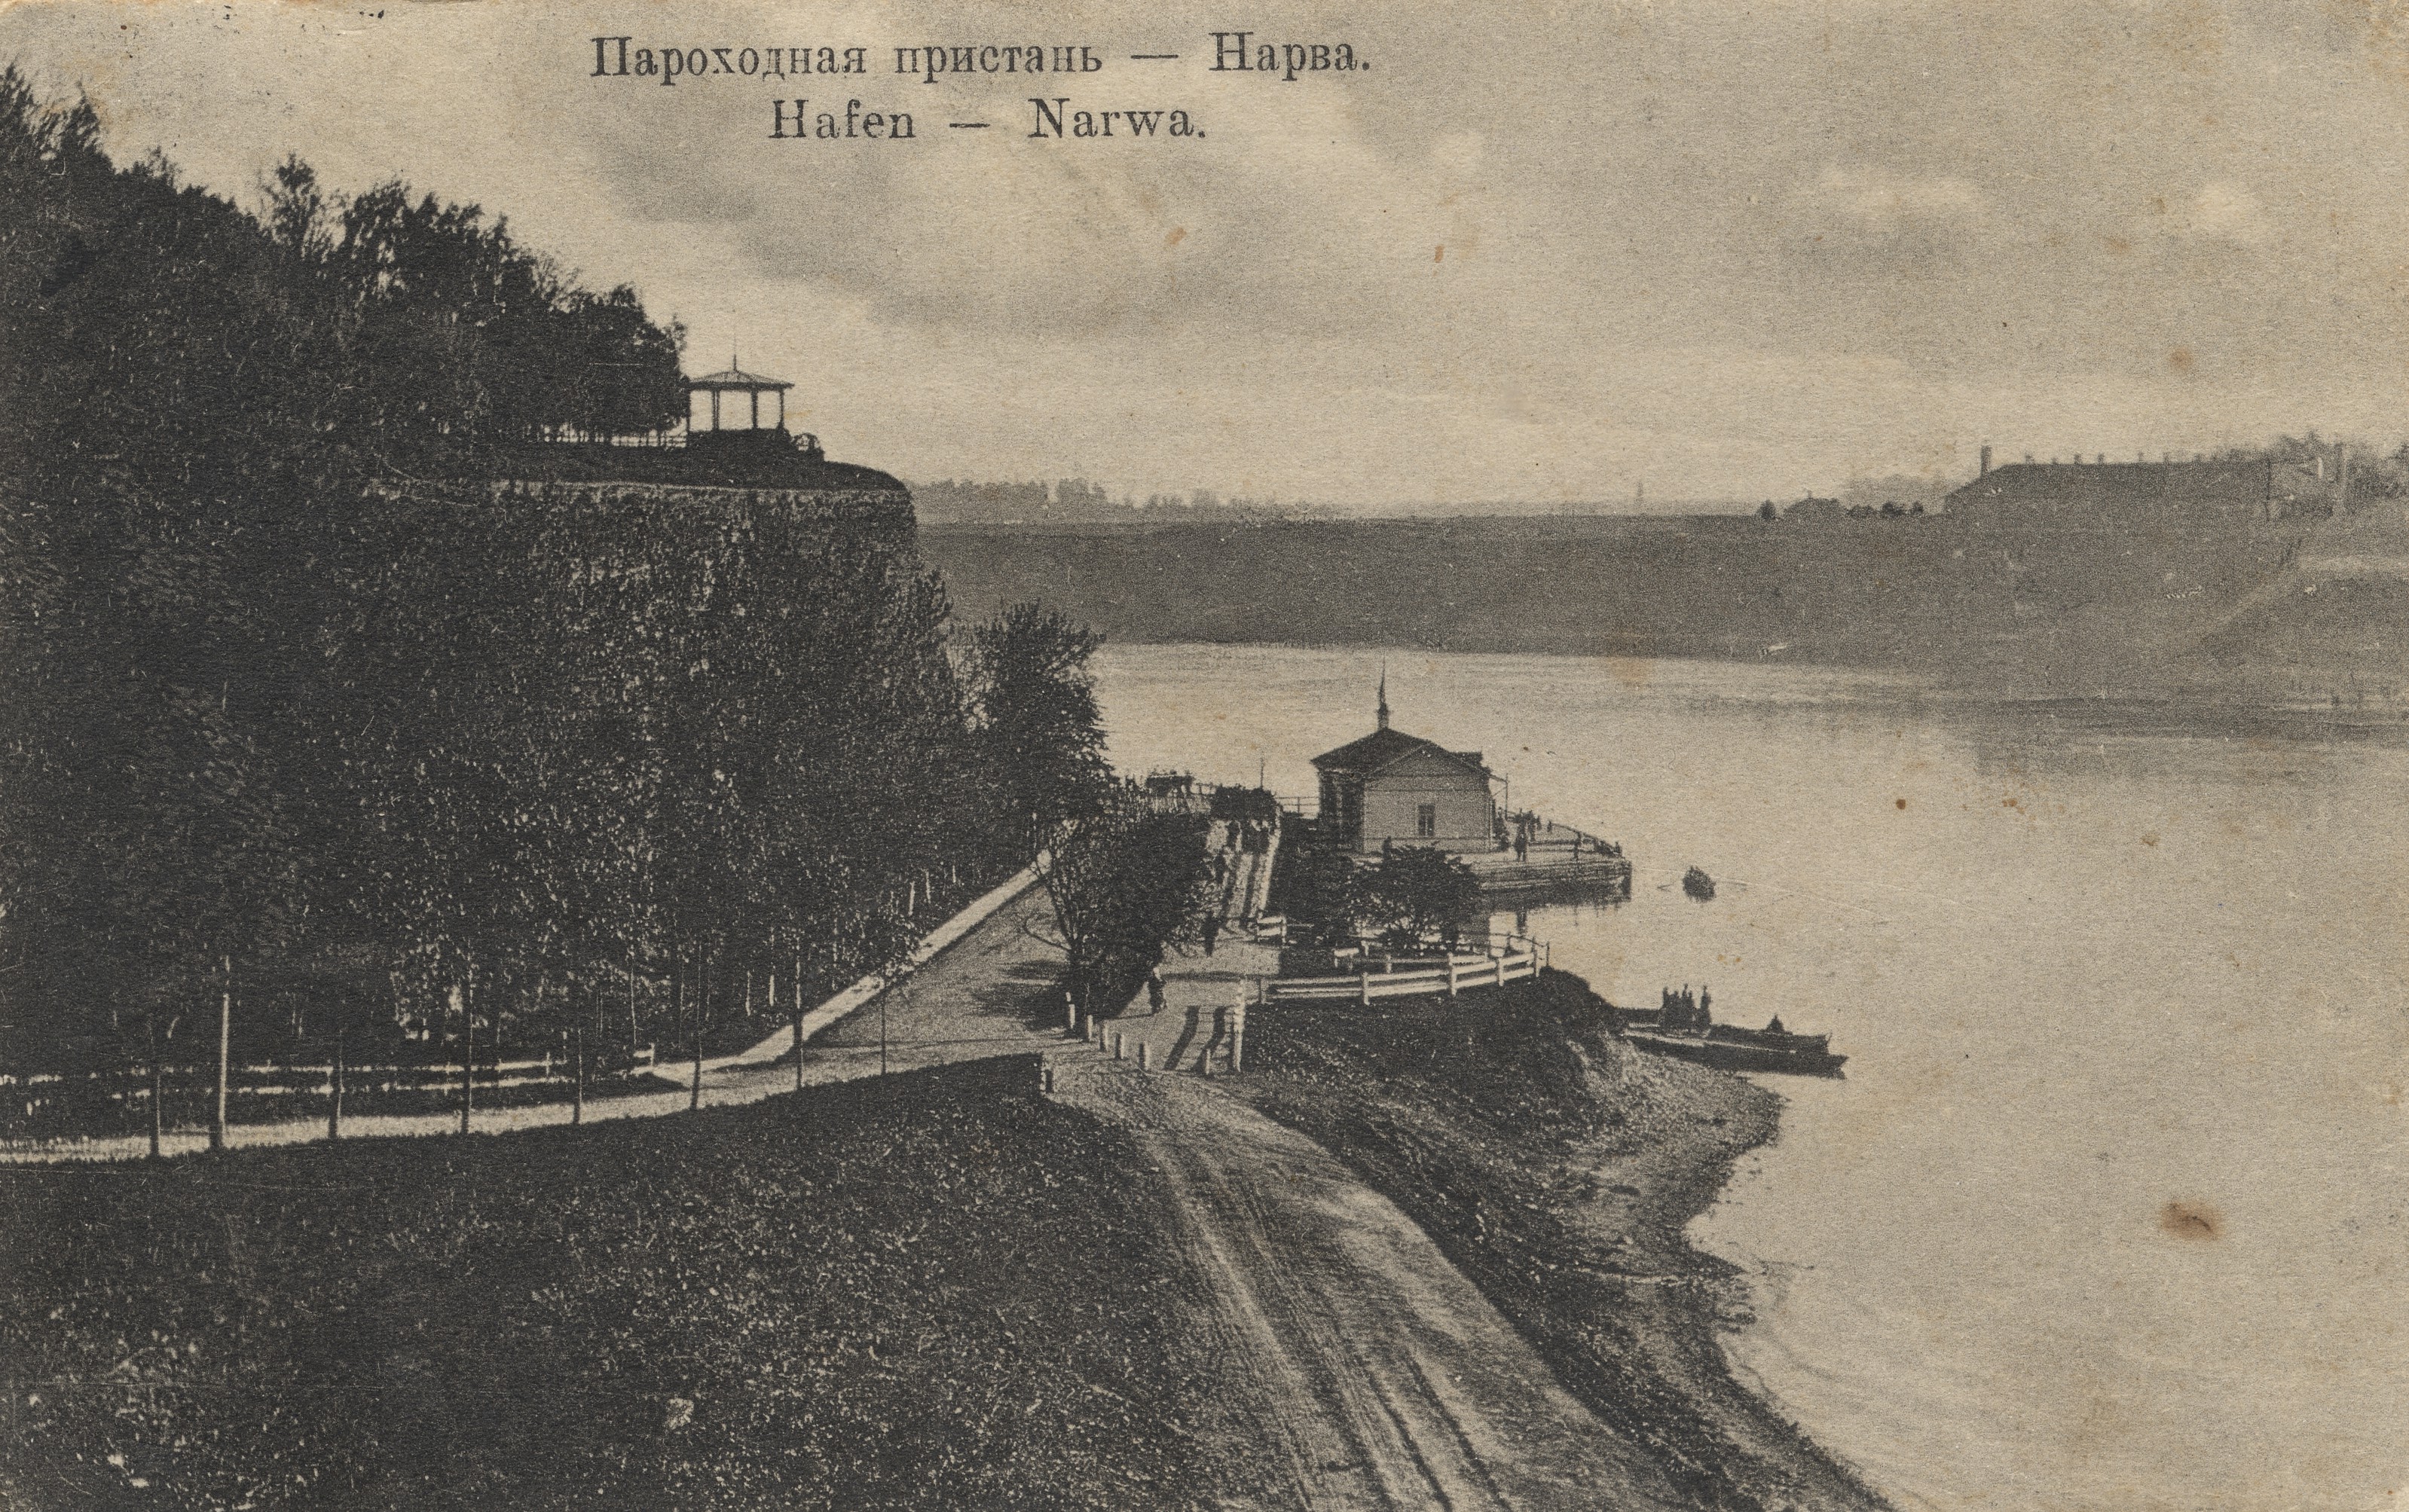 Narva : Sailway station = Narwa : Hafen